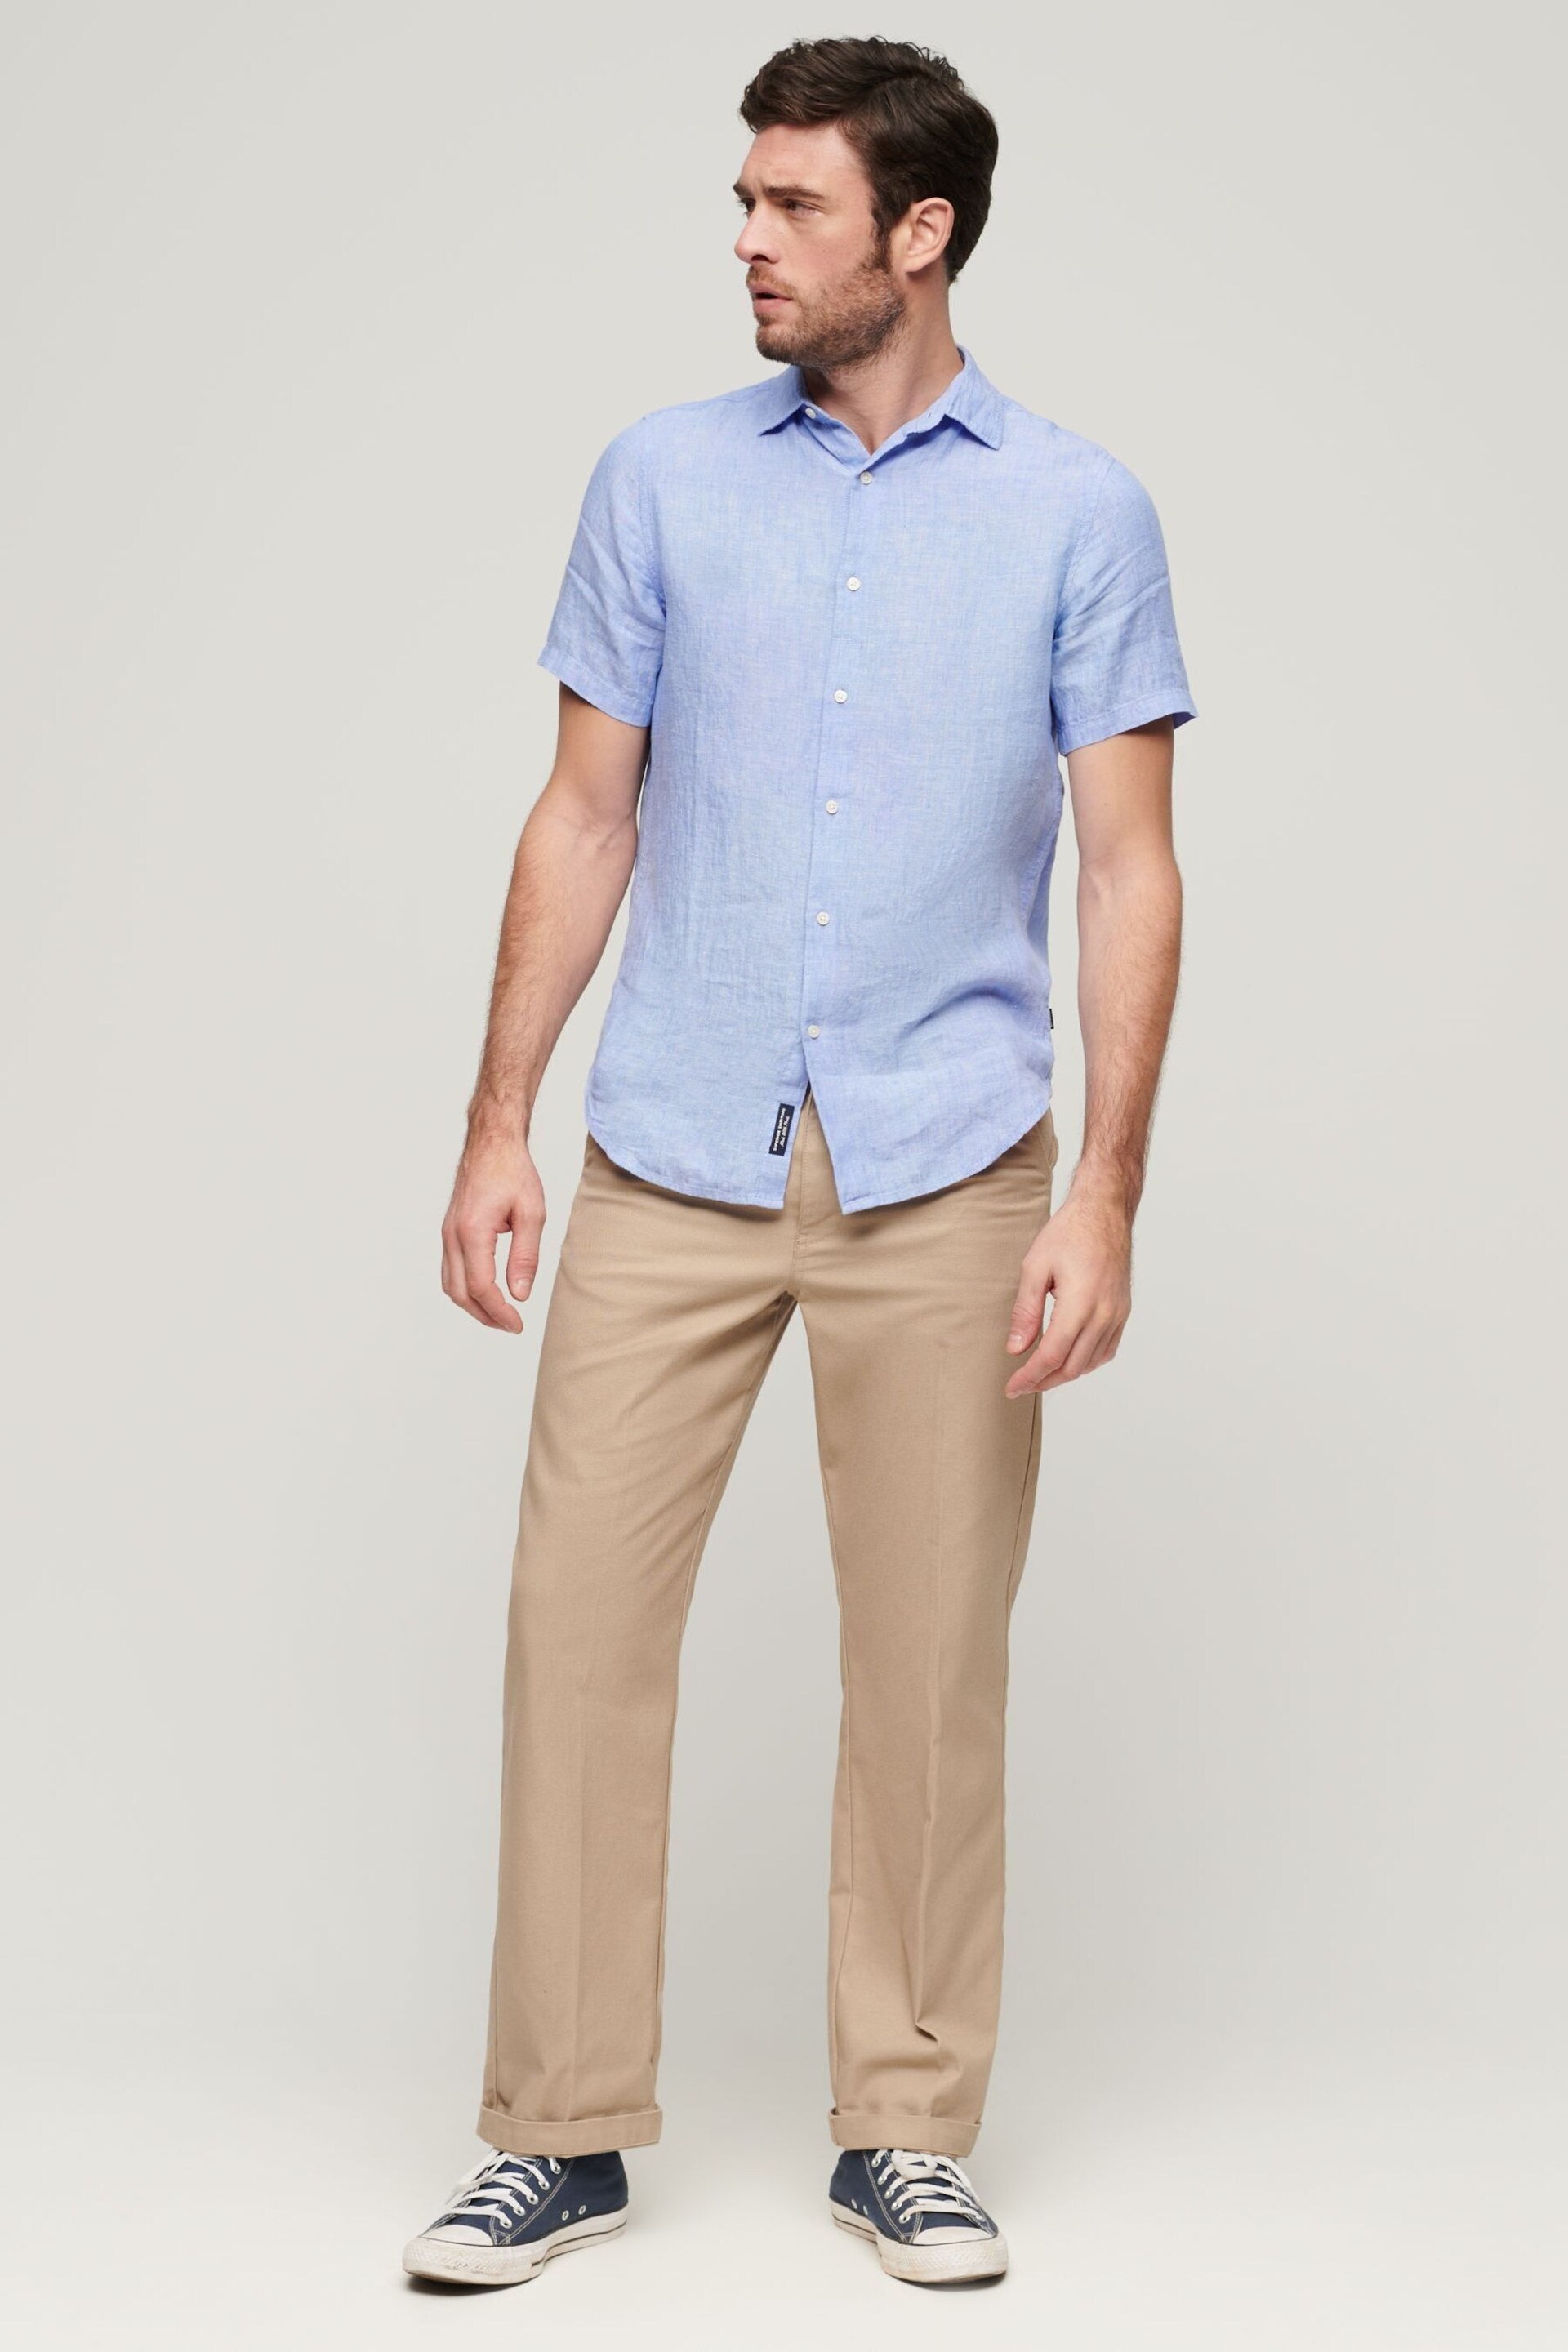 Superdry Blue Studios Casual Linen Short Sleeved Shirt - Image 2 of 6